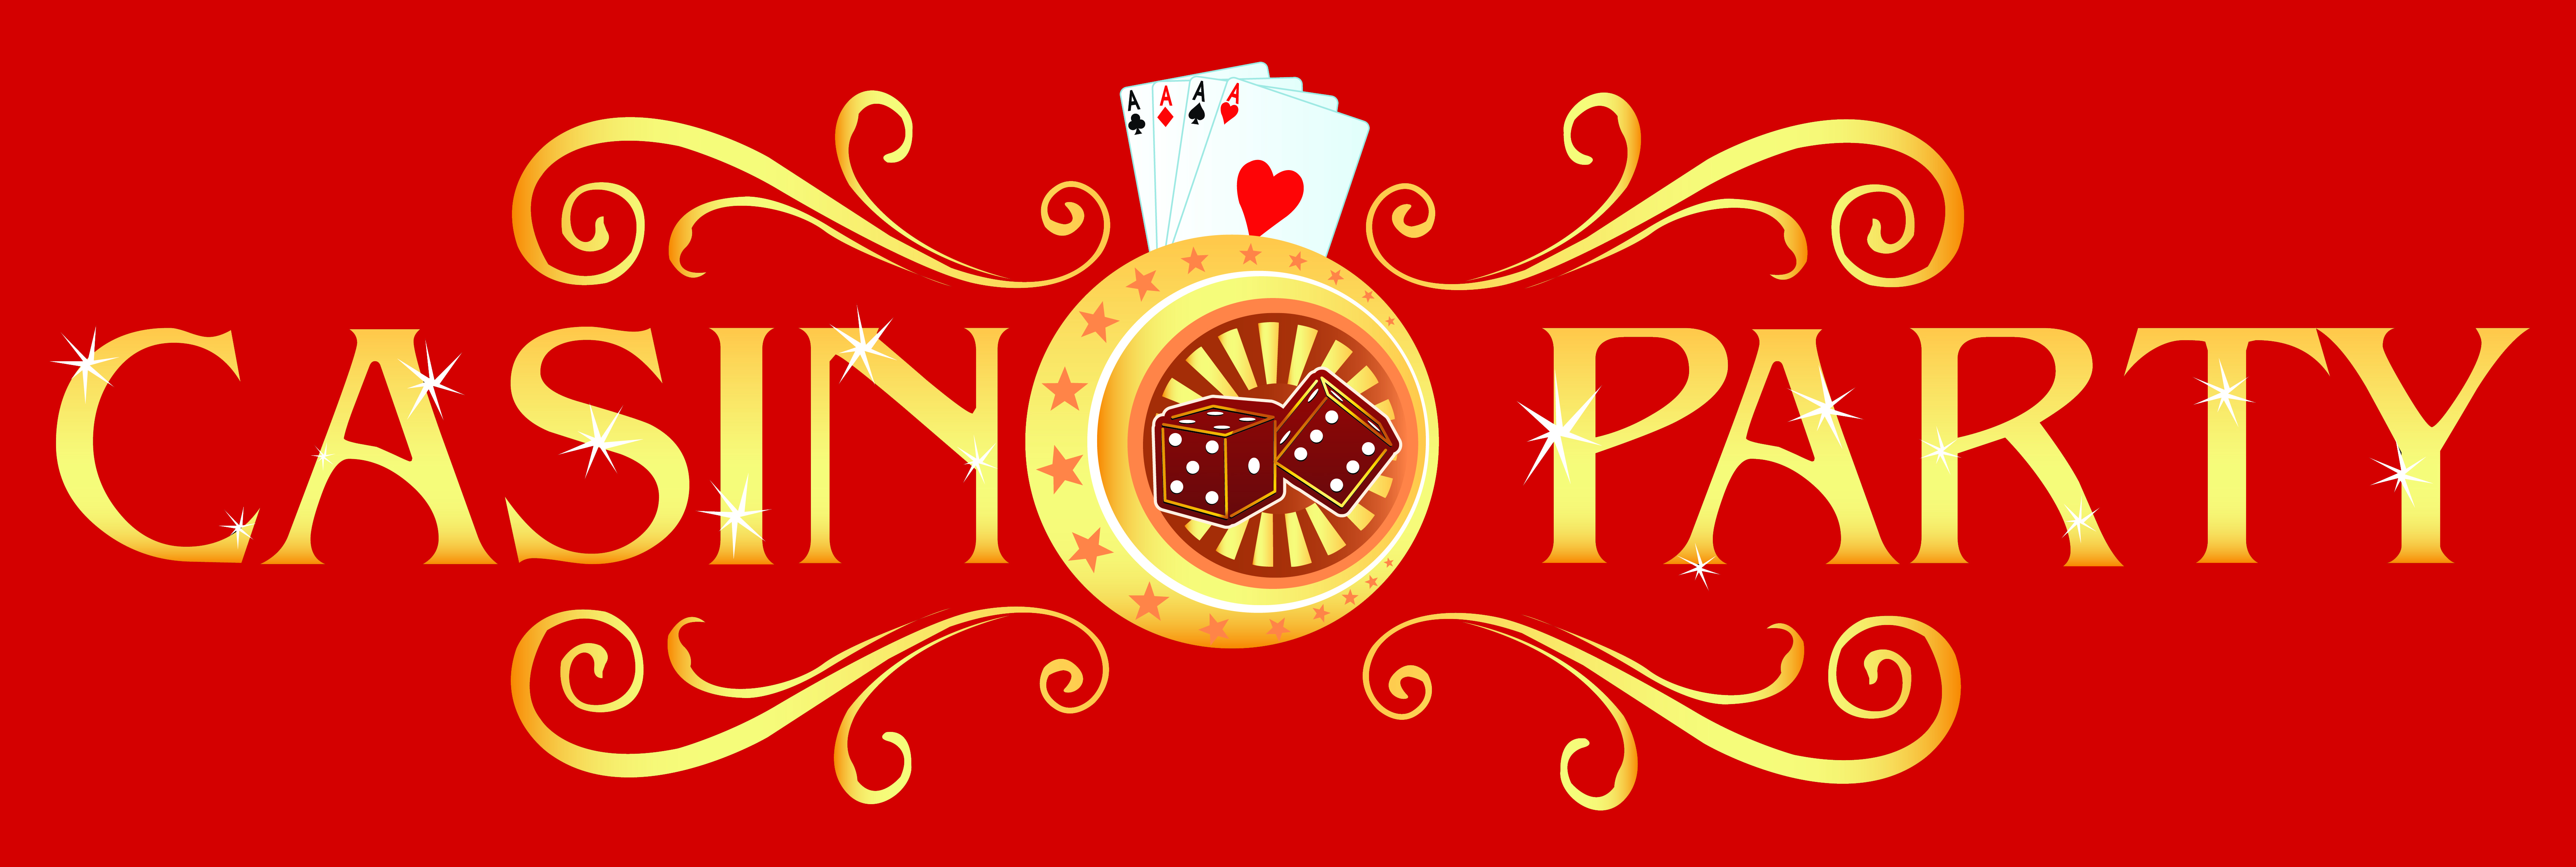 Ent casino сайт вход. Party Casino logo. JTRJDA tghuq логотип. Q A logo Casino. Stake Casino logo.